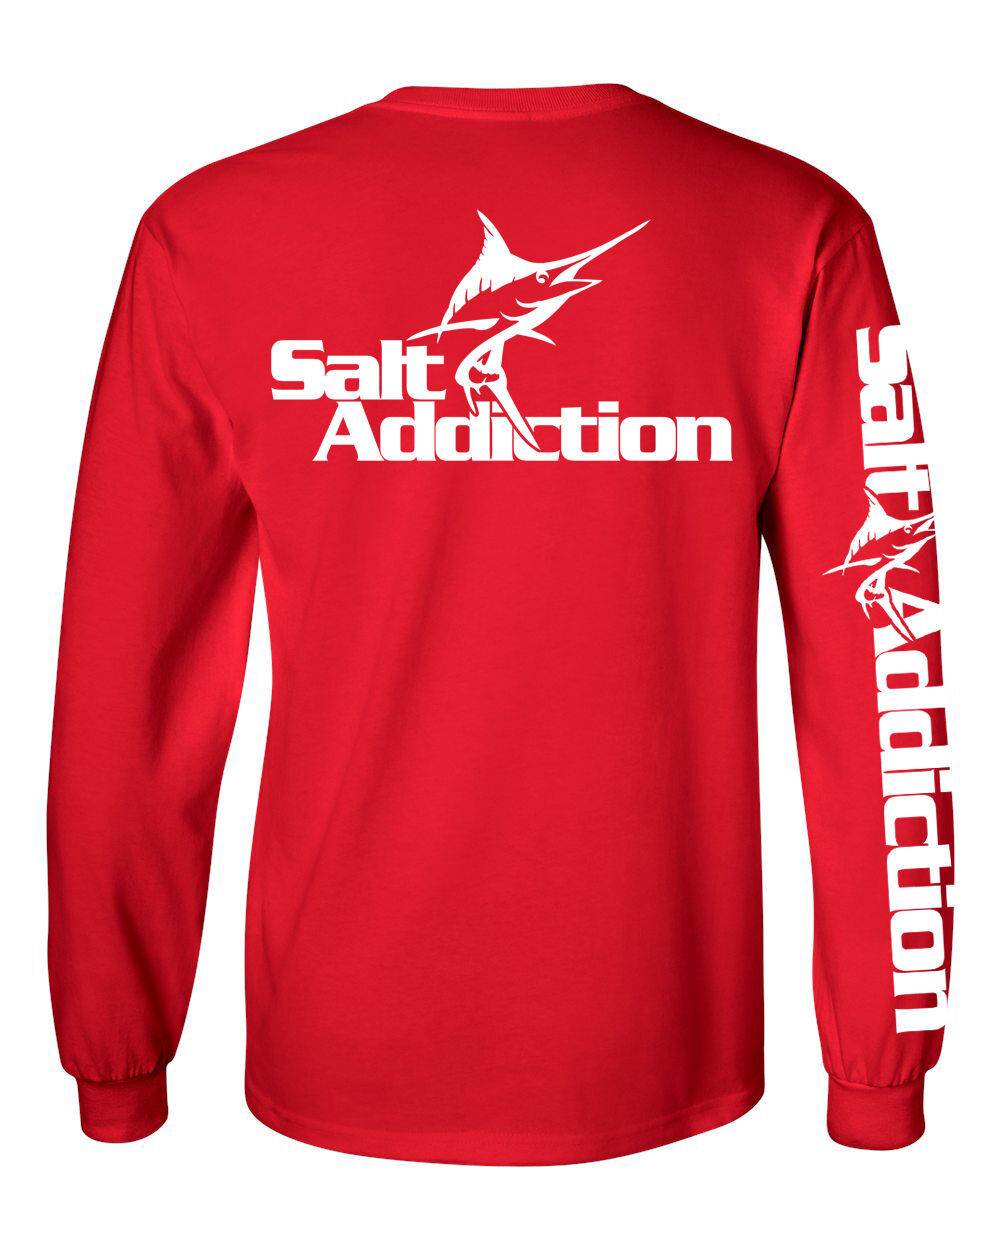 Salt Addiction long sleeve saltwater fishing t shirt flats marlin  ocean  sea